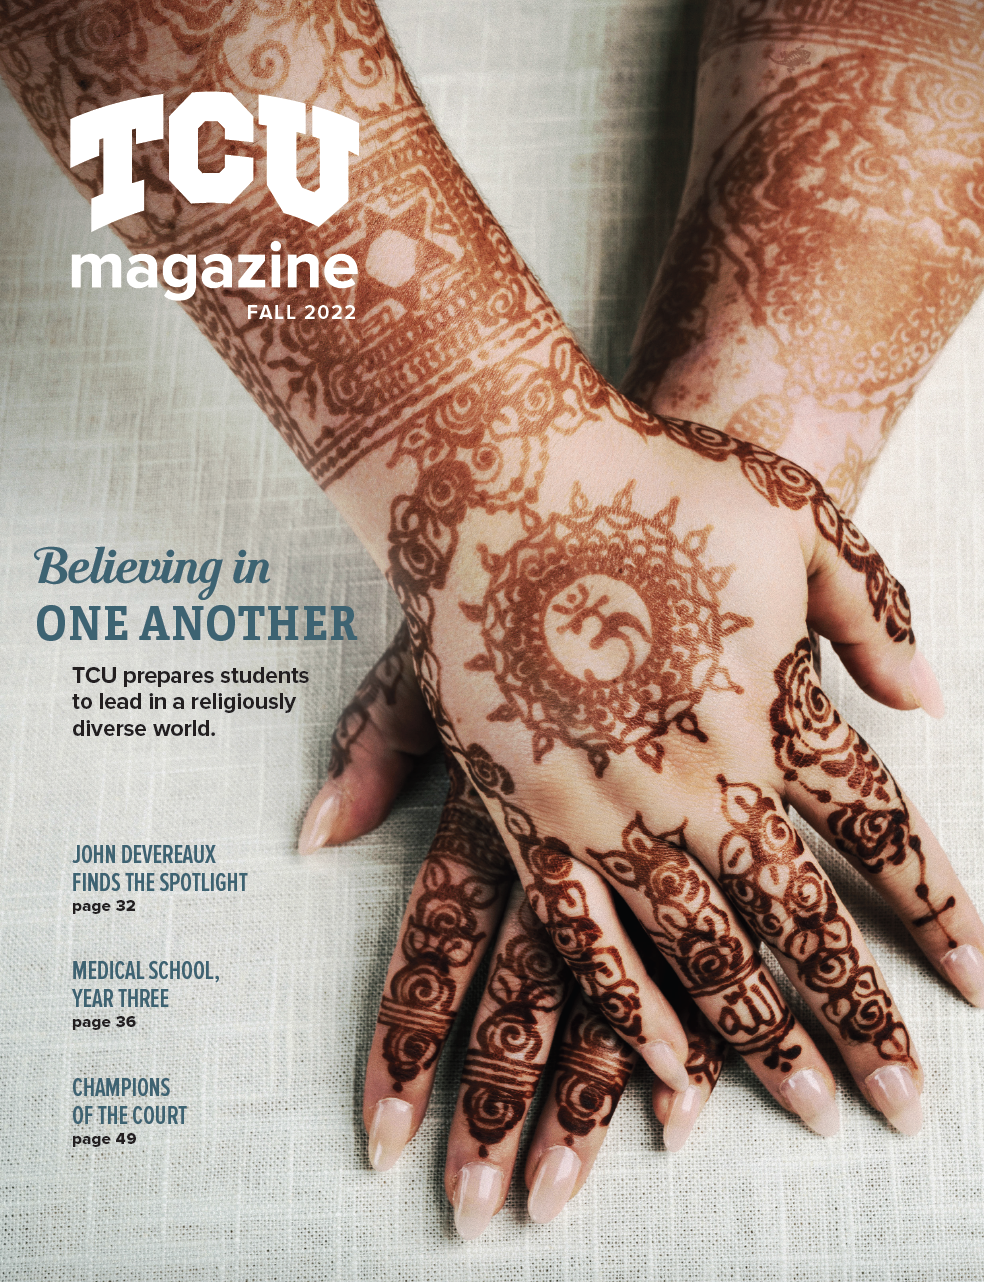 Fall 2022 TCU Magazine cover features custom henna artwork on a pair of hands